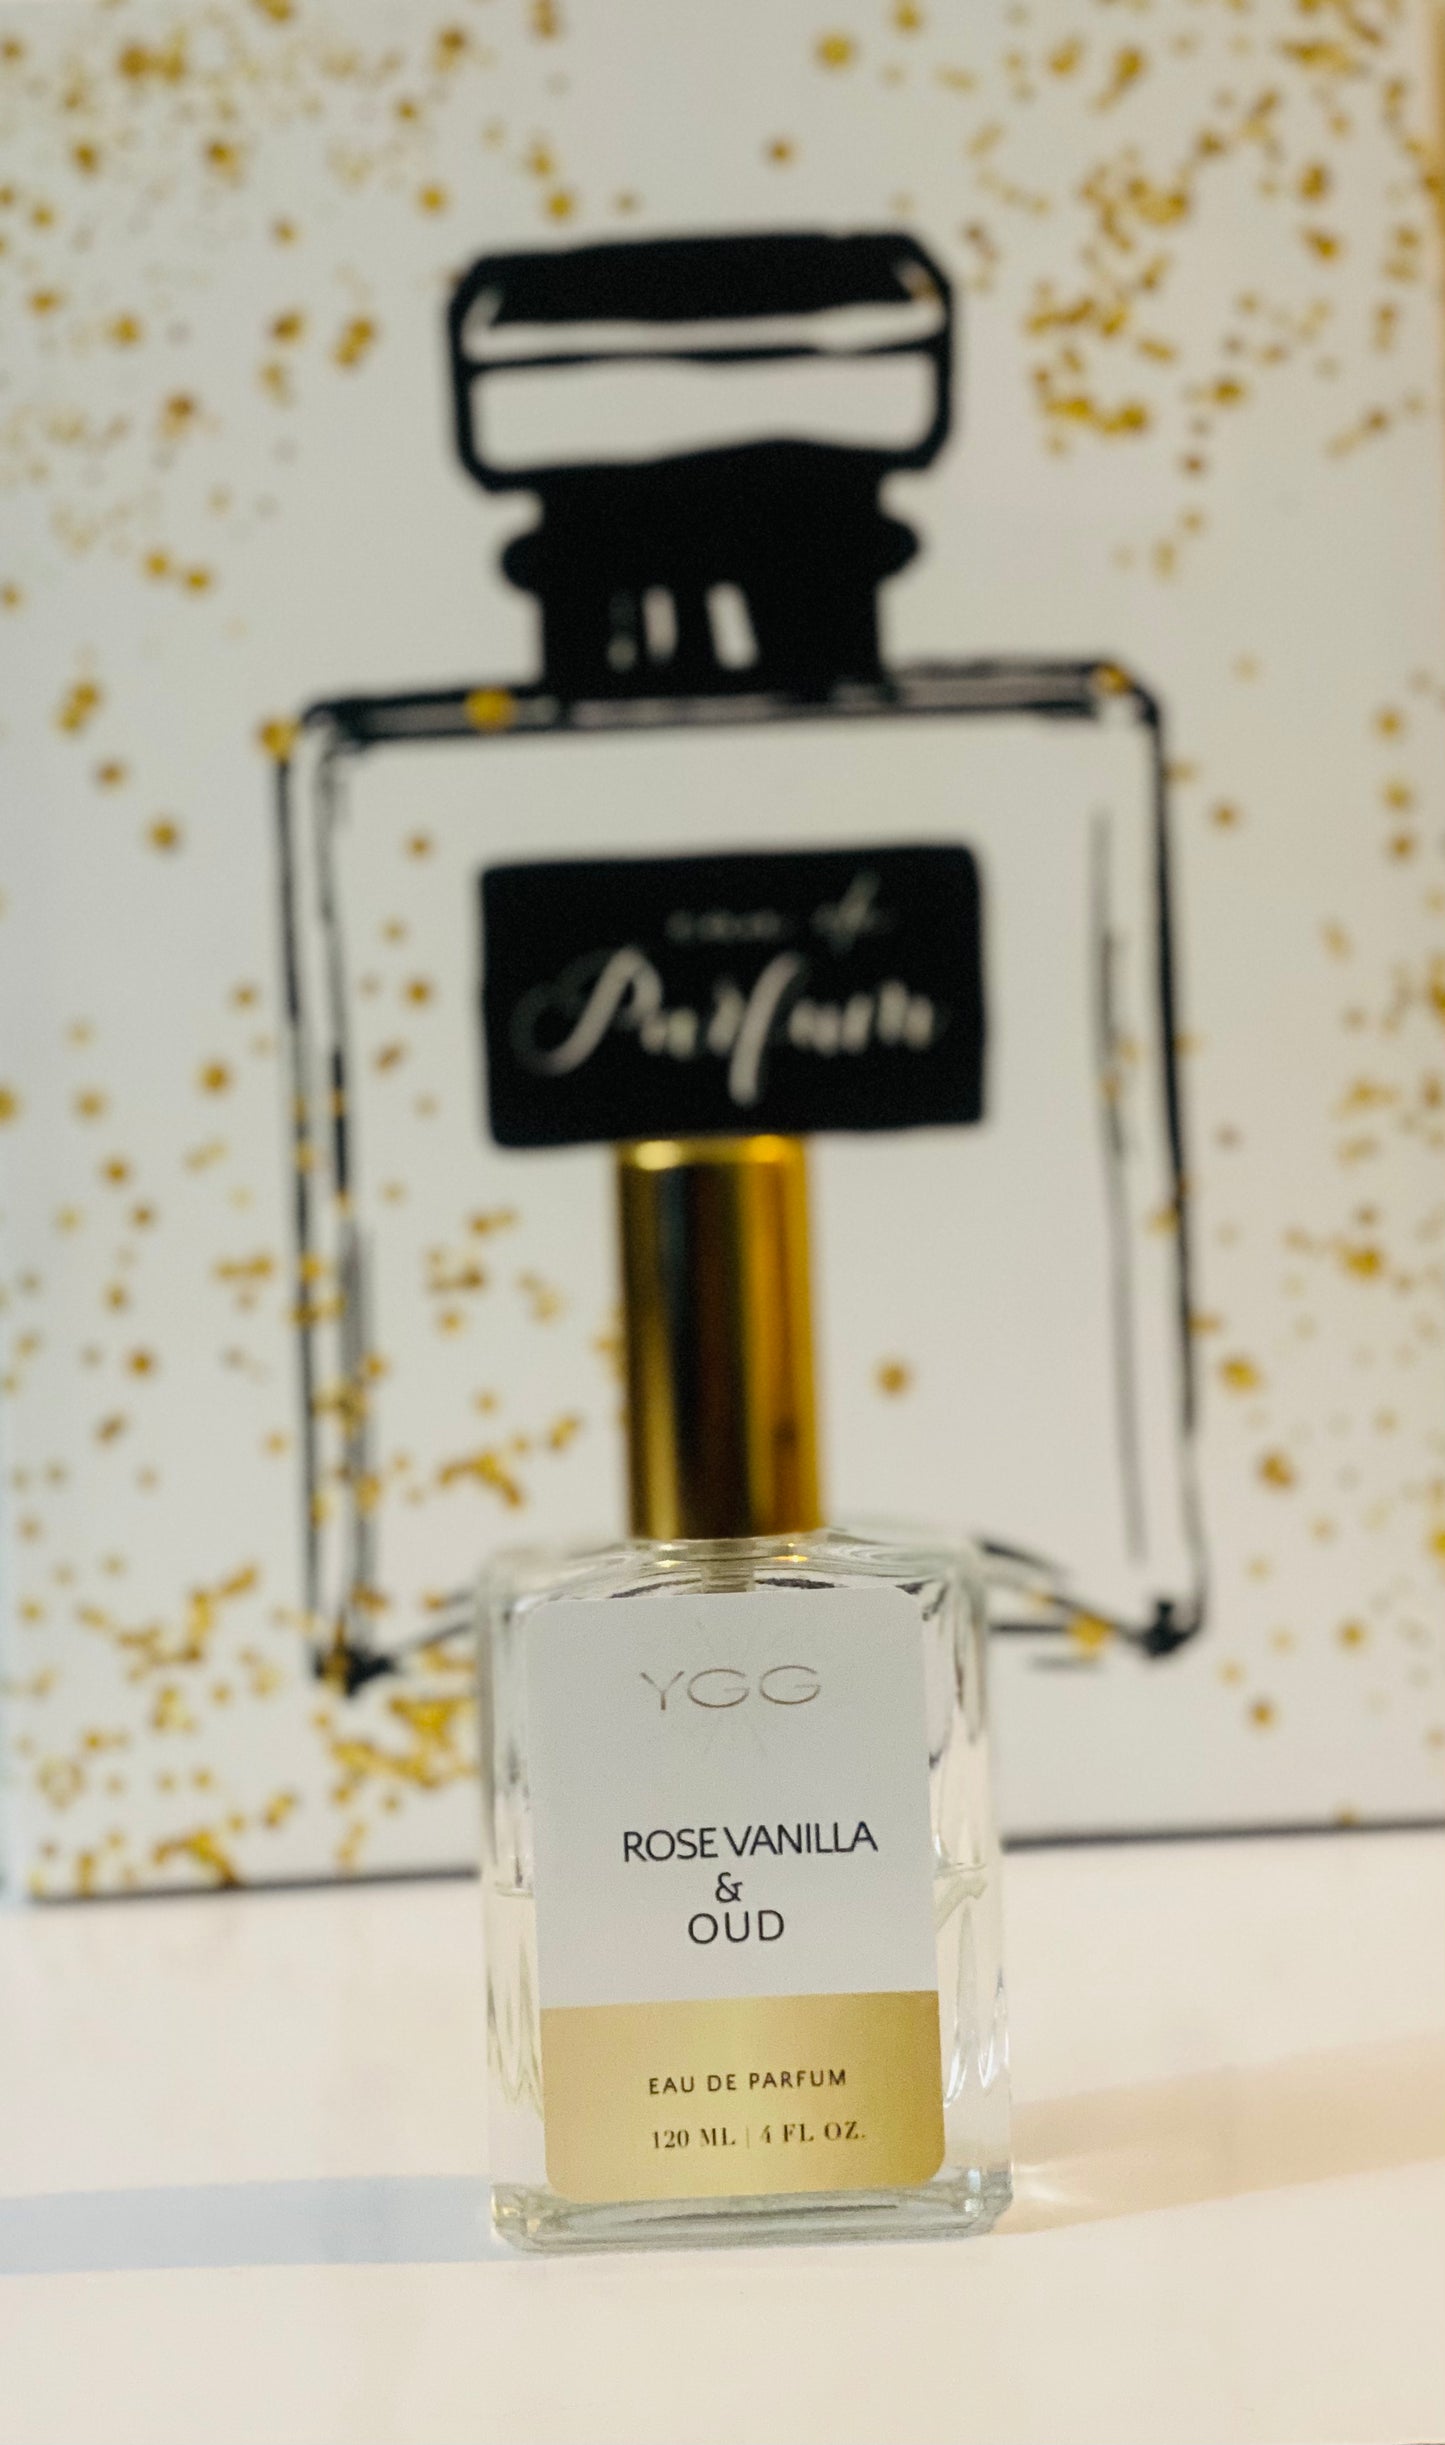 Luxury Perfumes by YGG